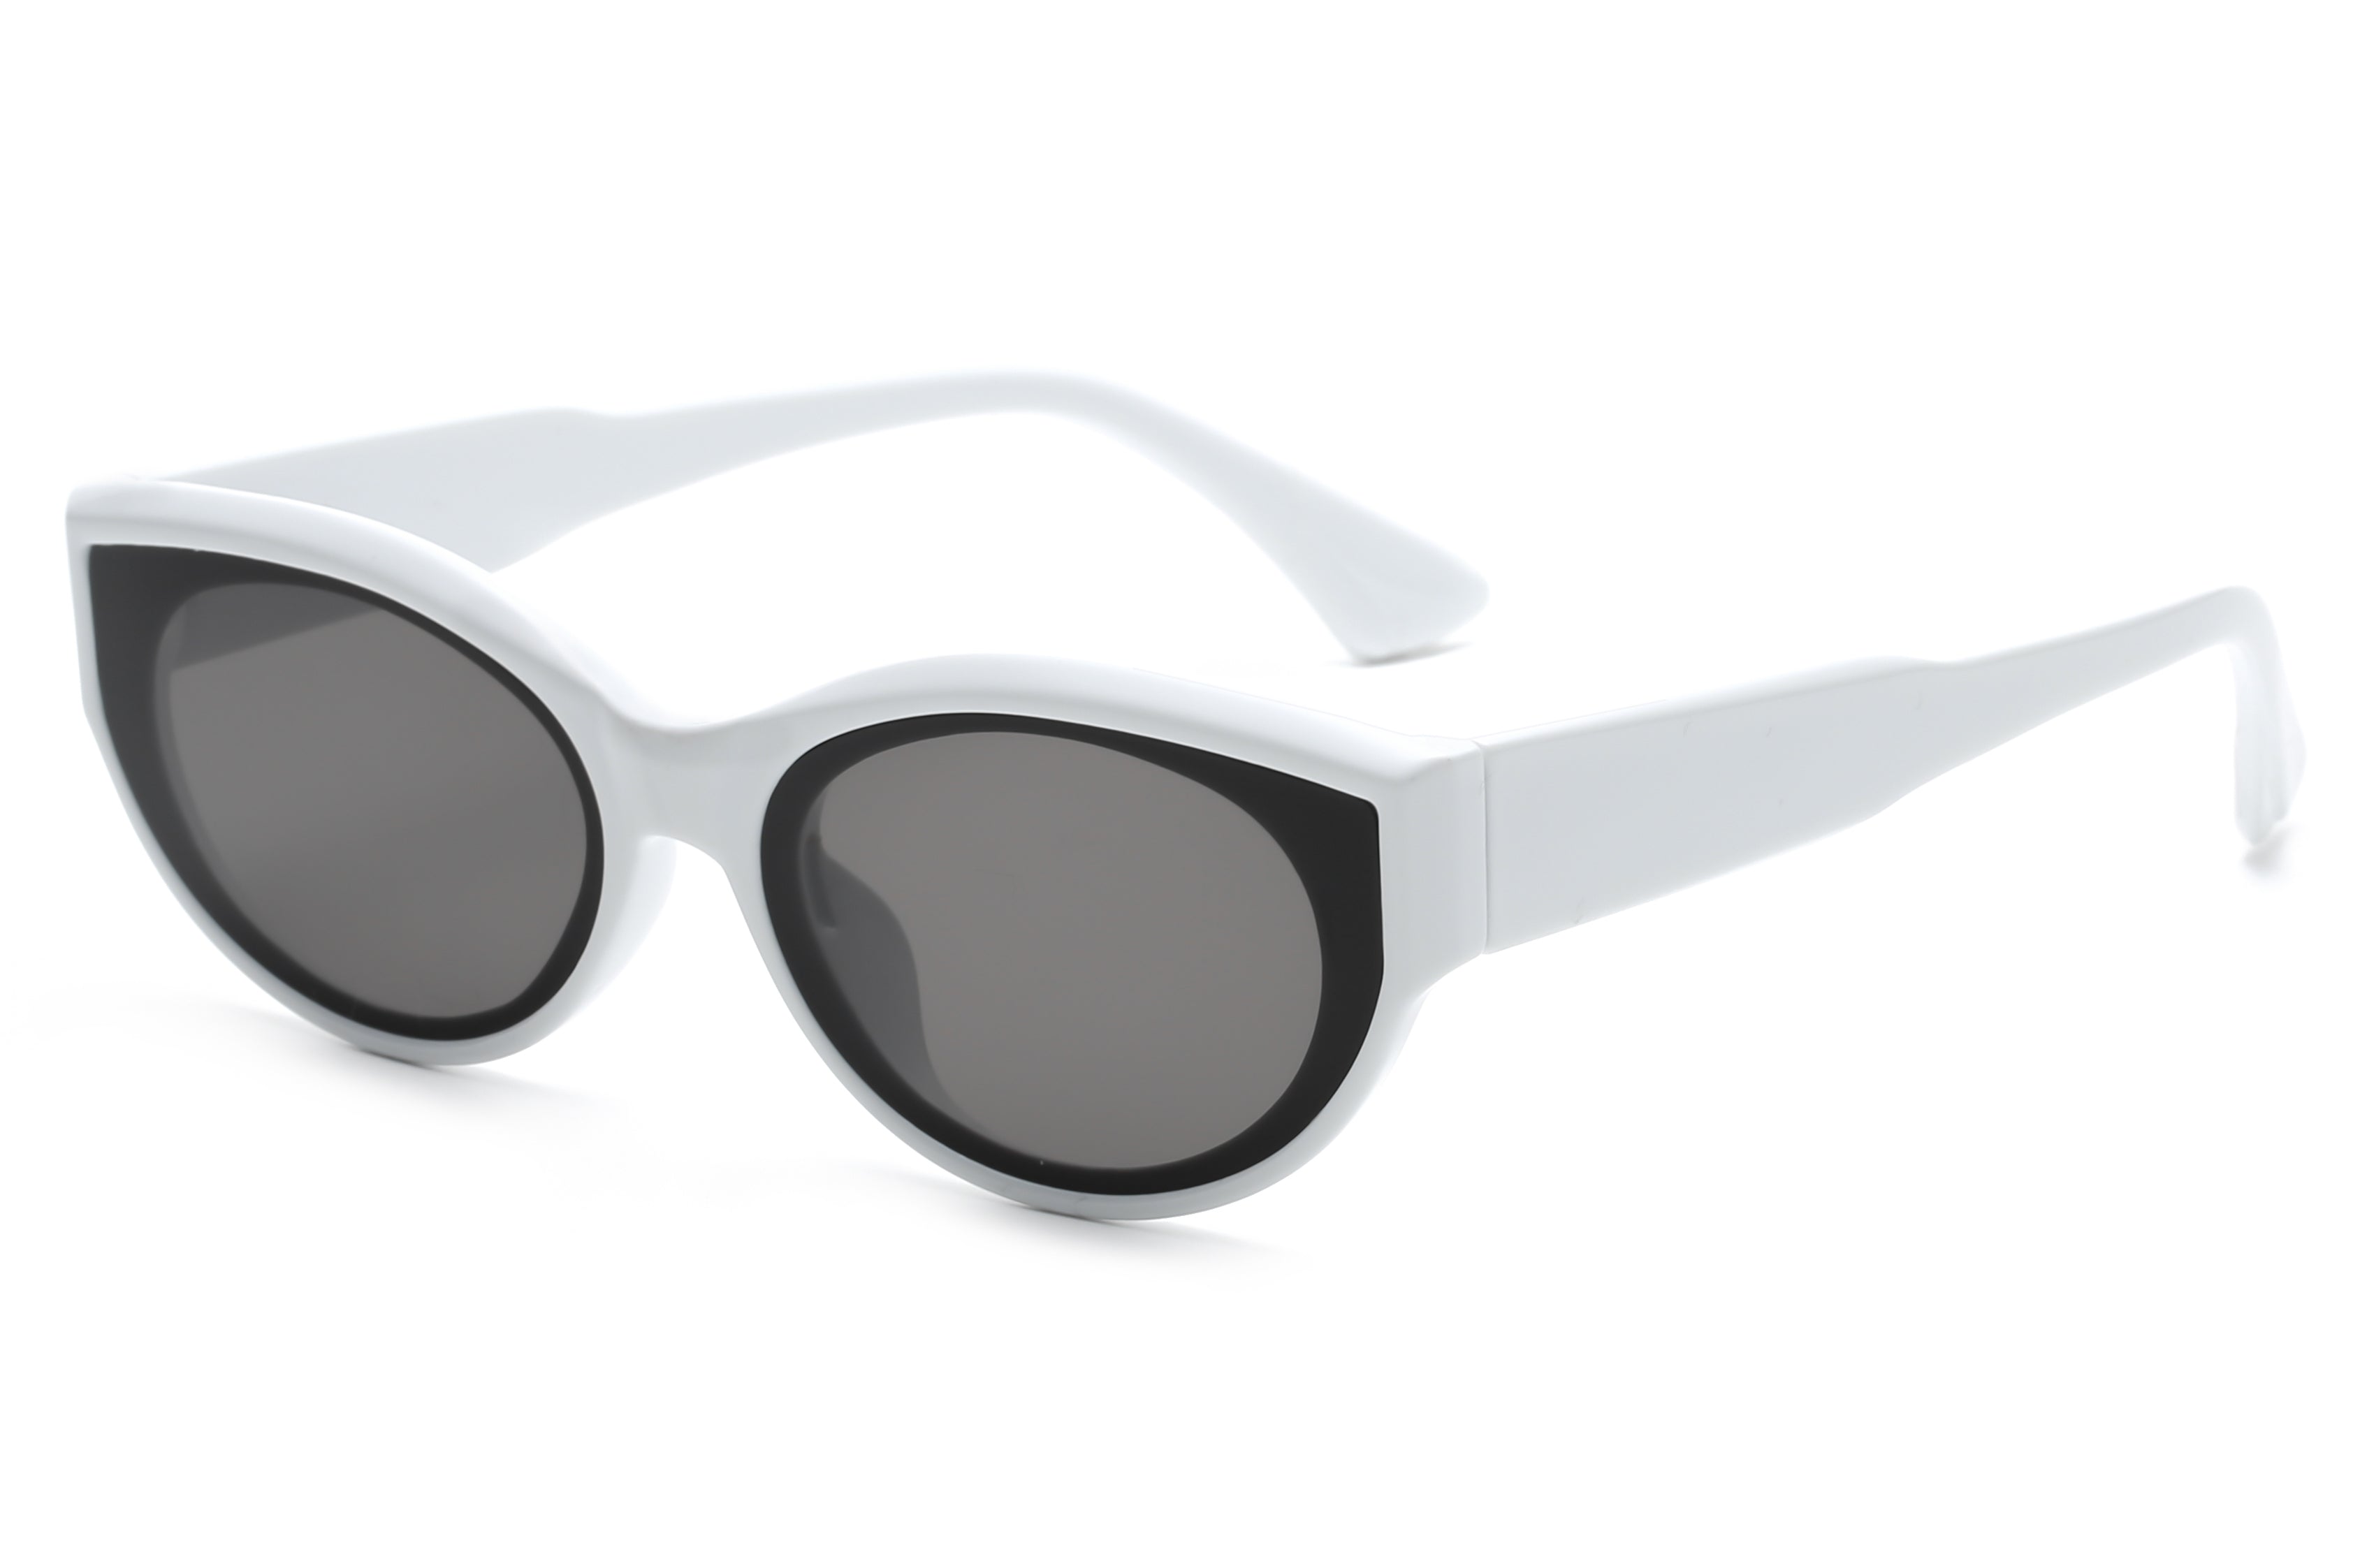 H1021 - Retro Oval Round Vintage Unisex Fashion Sunglasses